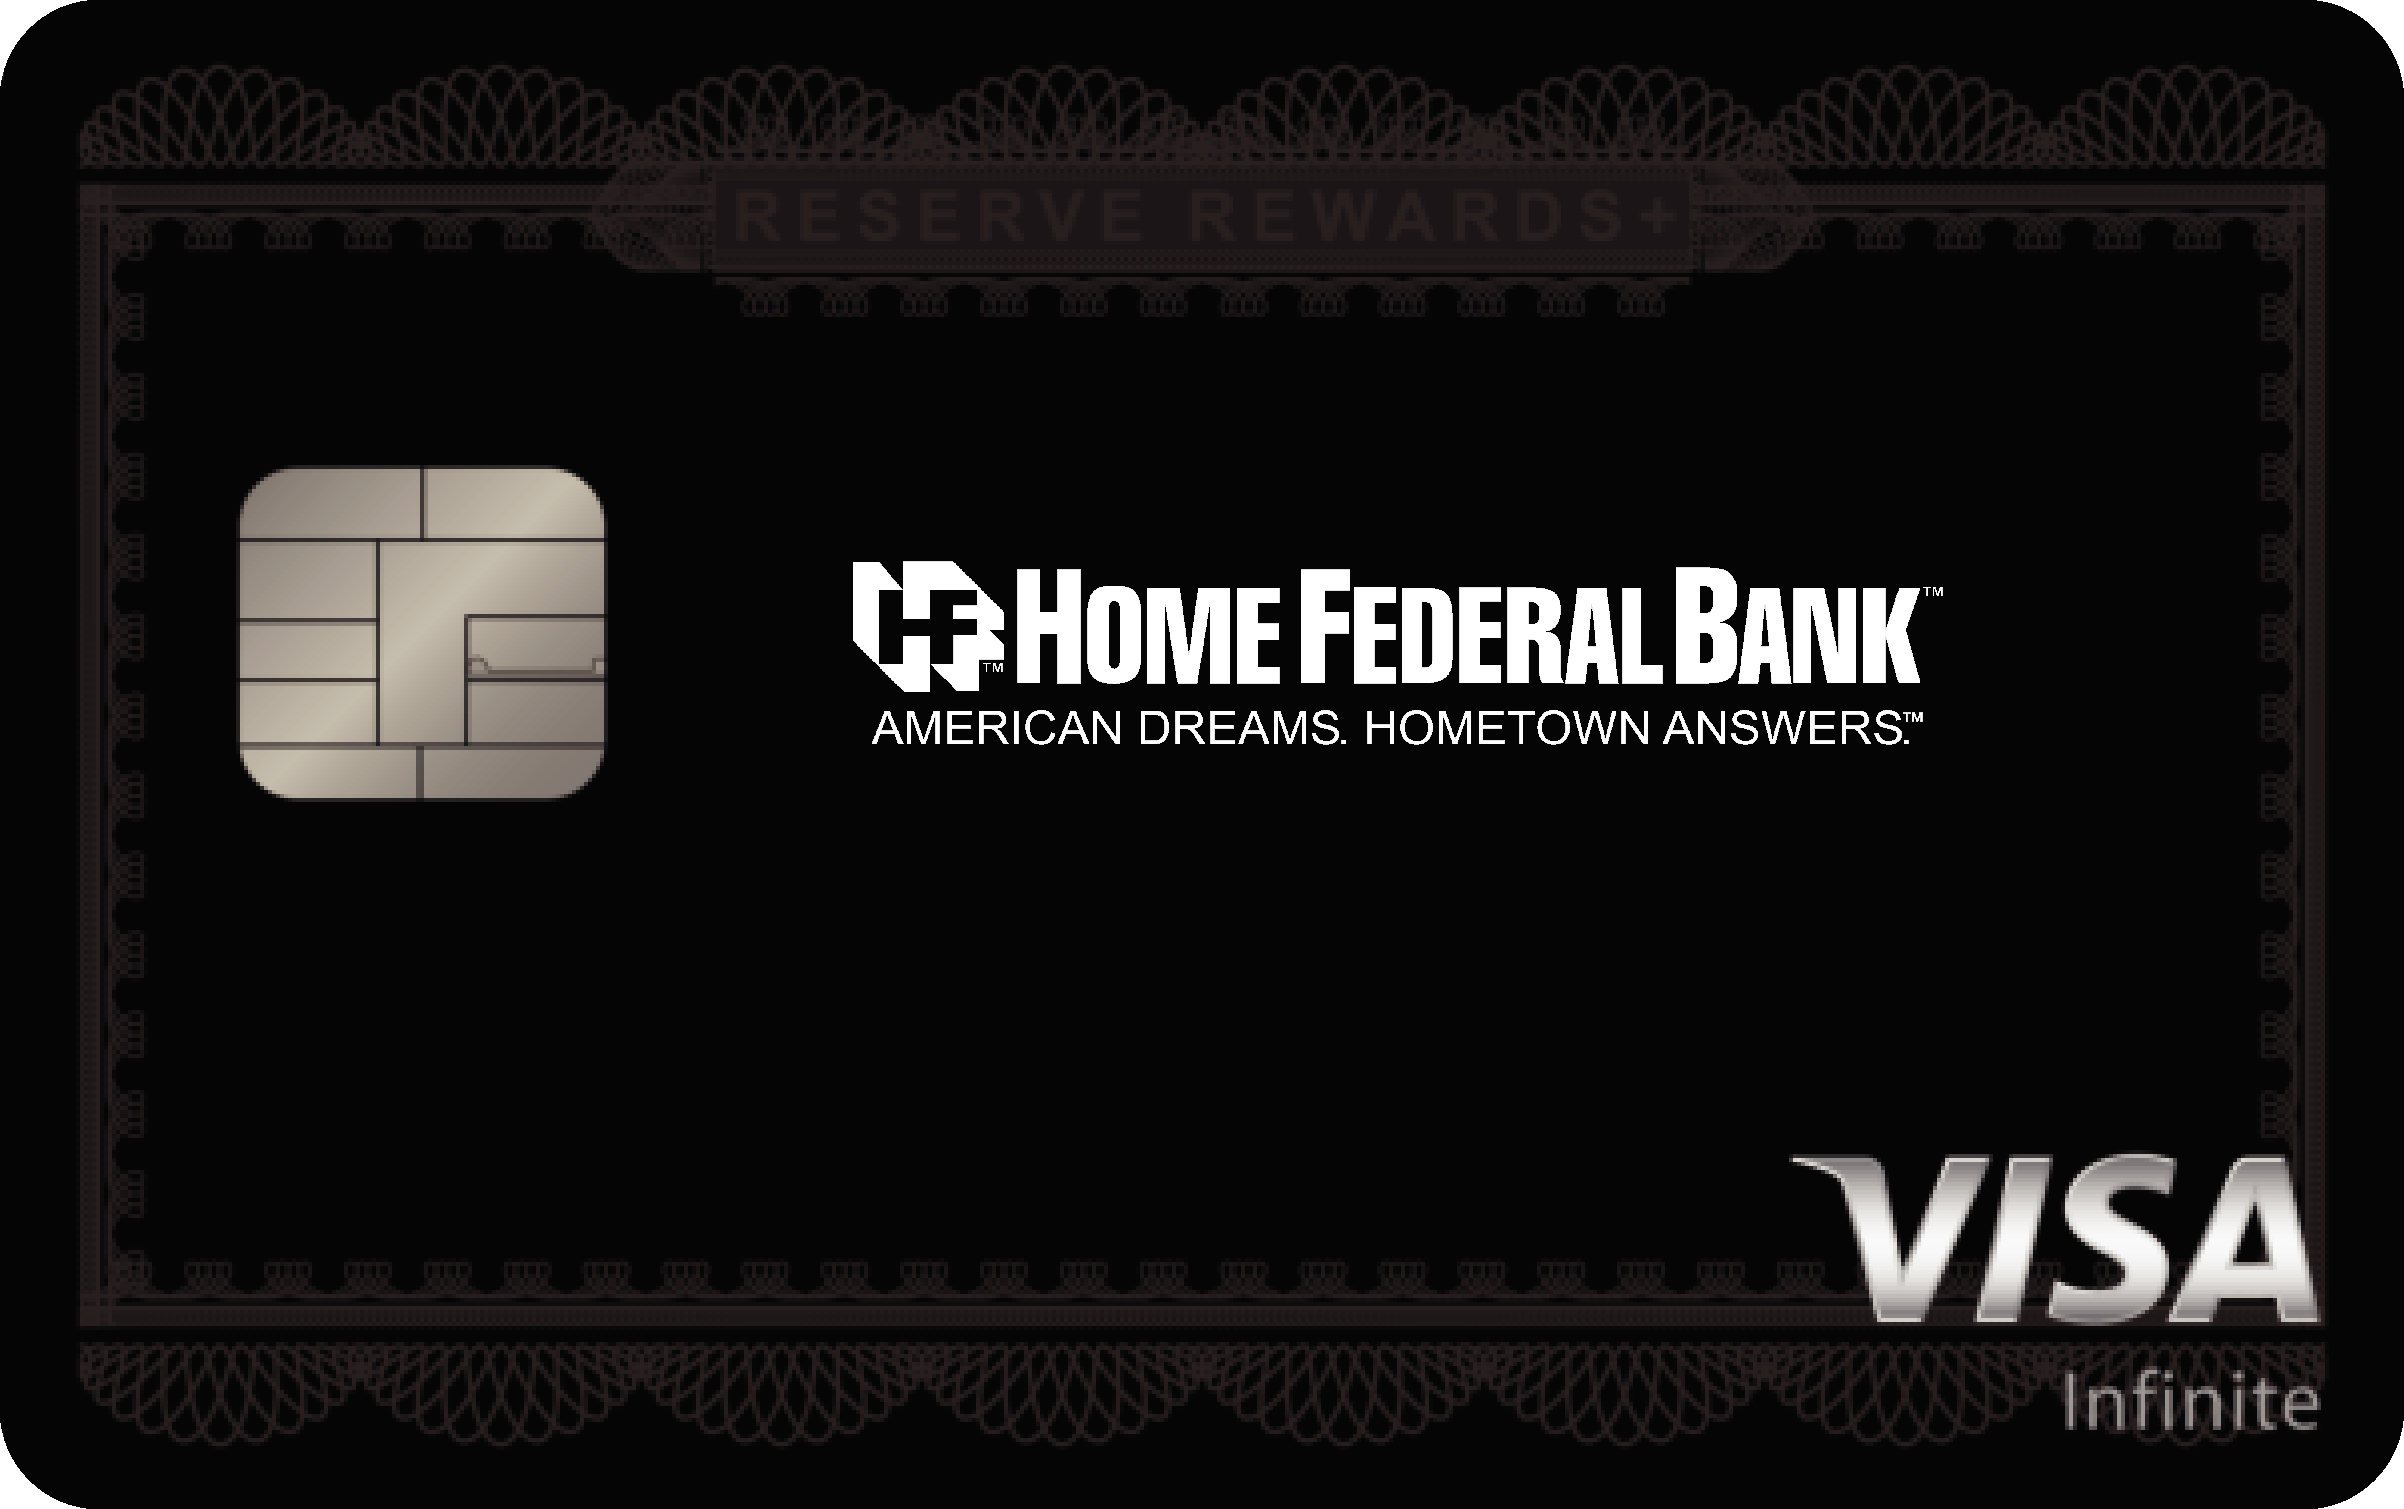 Home Federal Bank Reserve Rewards+ Card